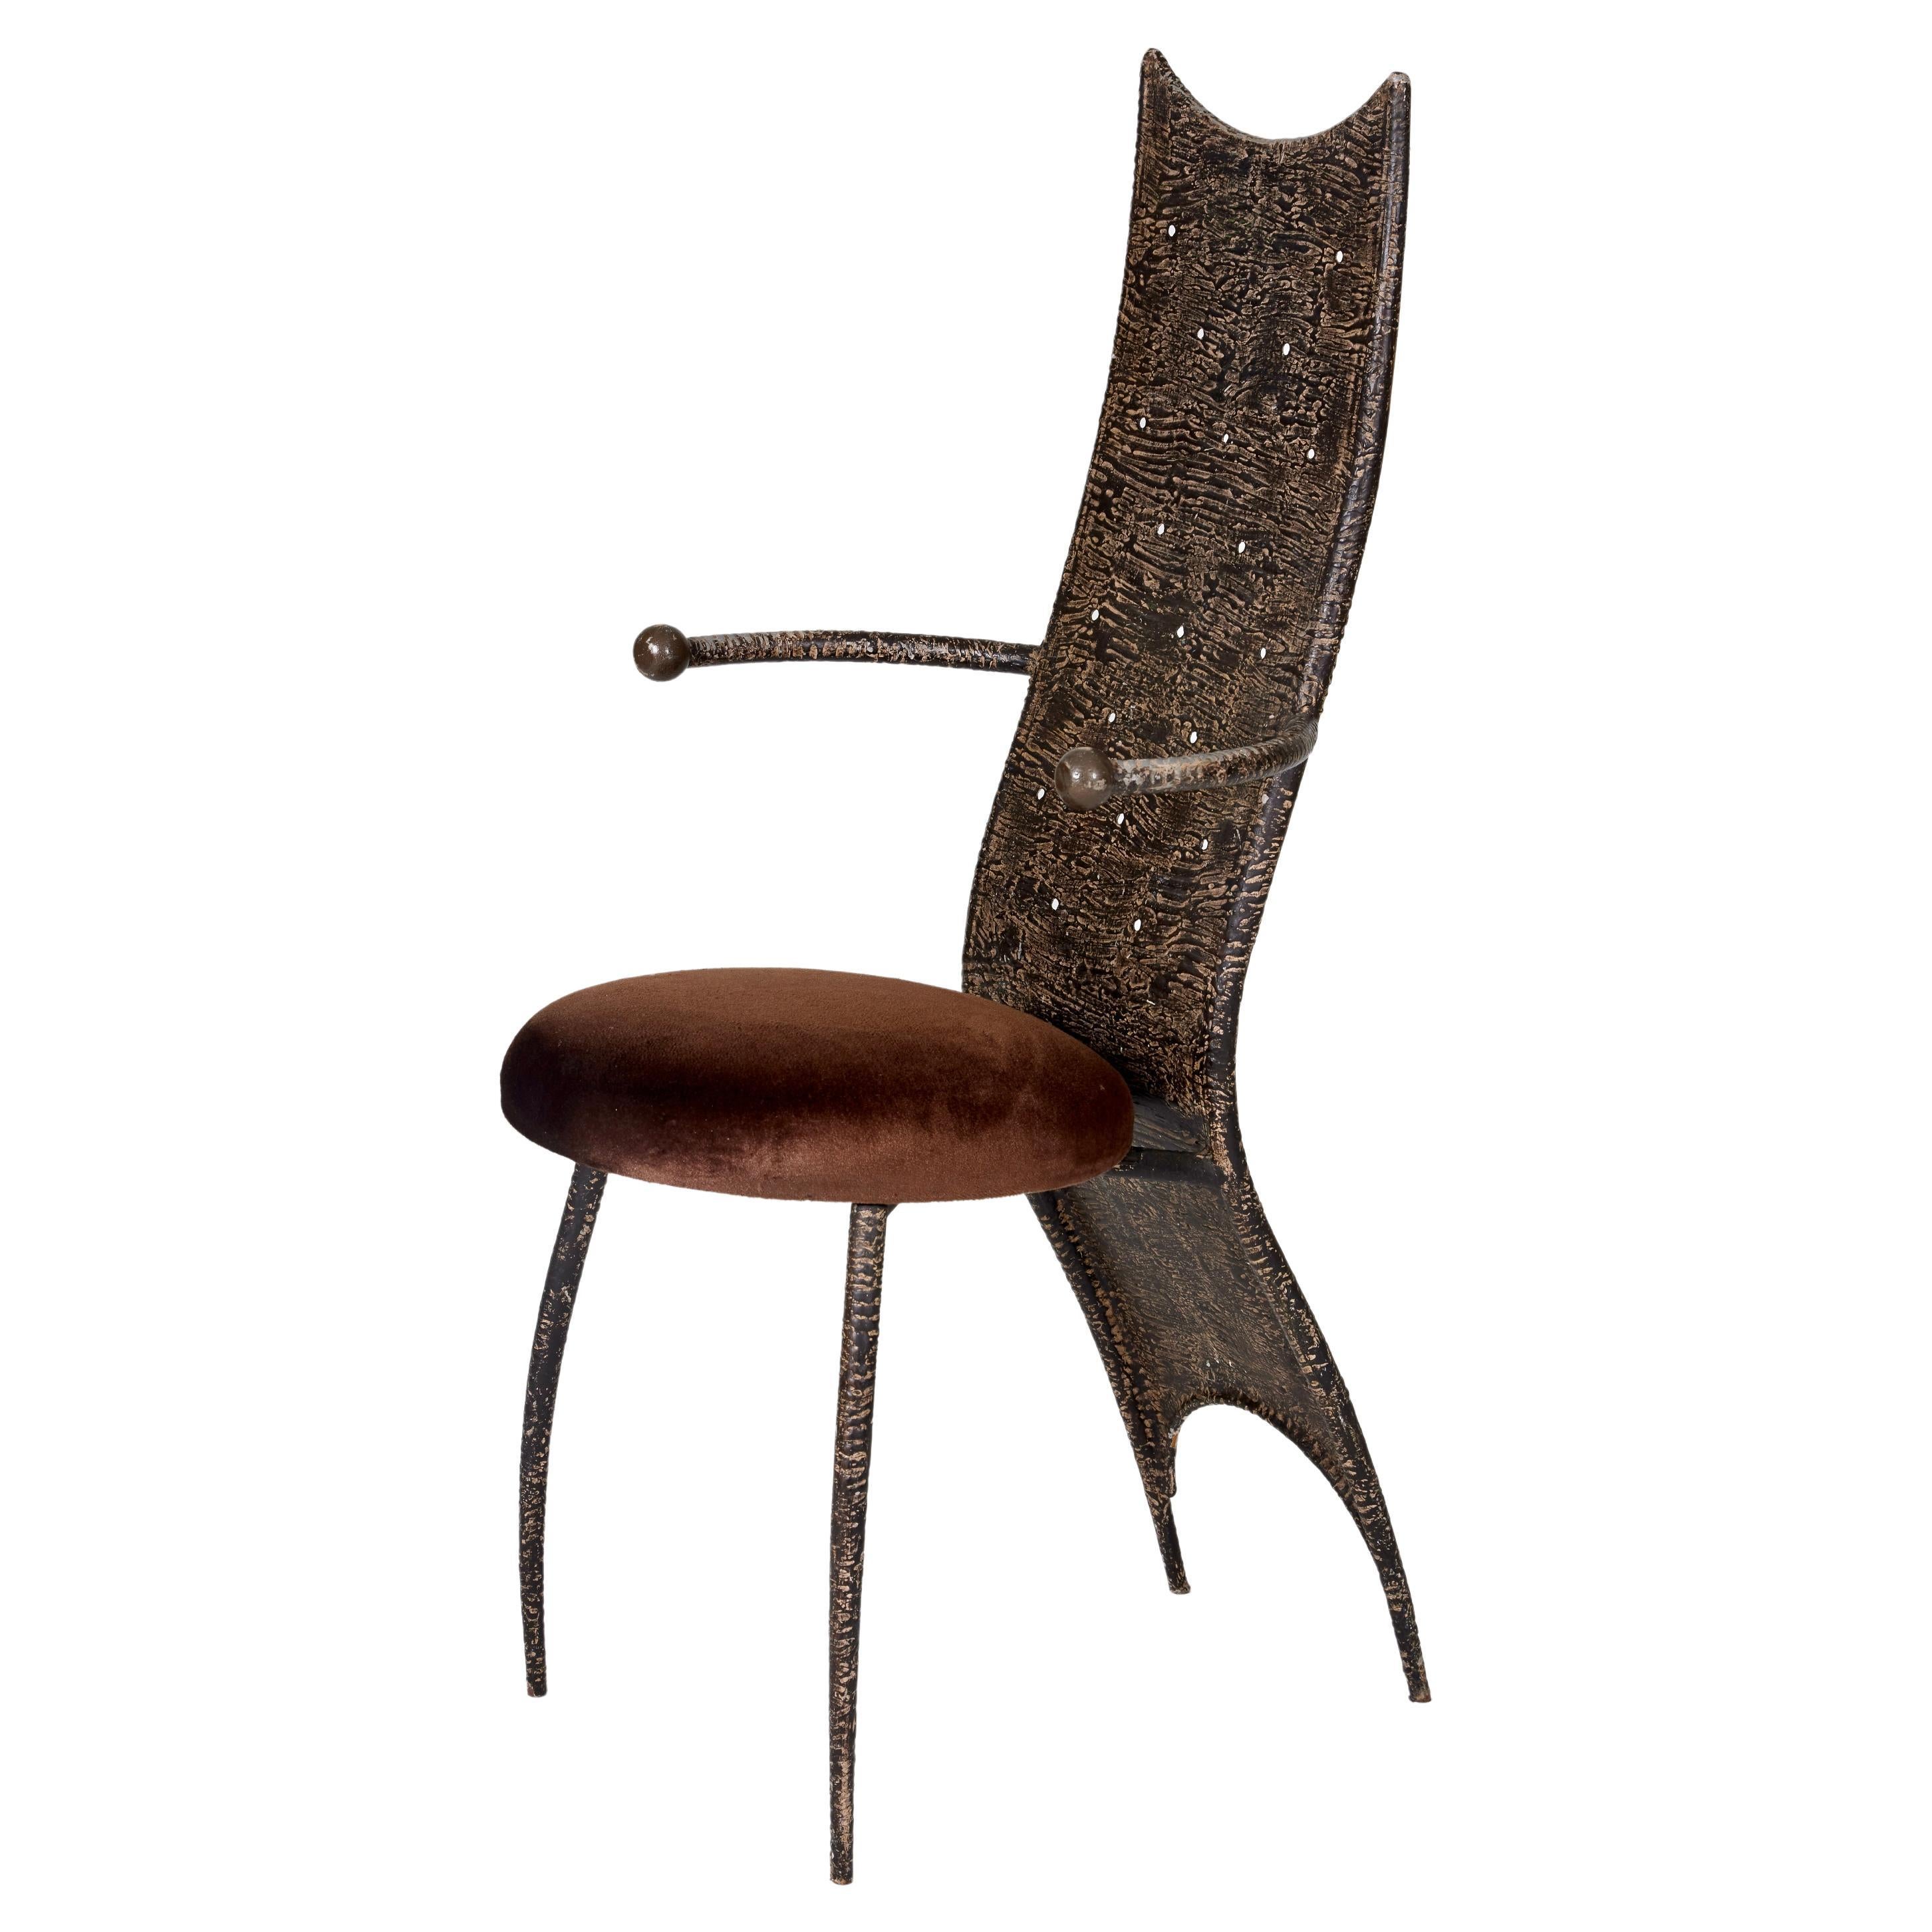 Post-modern metal chair